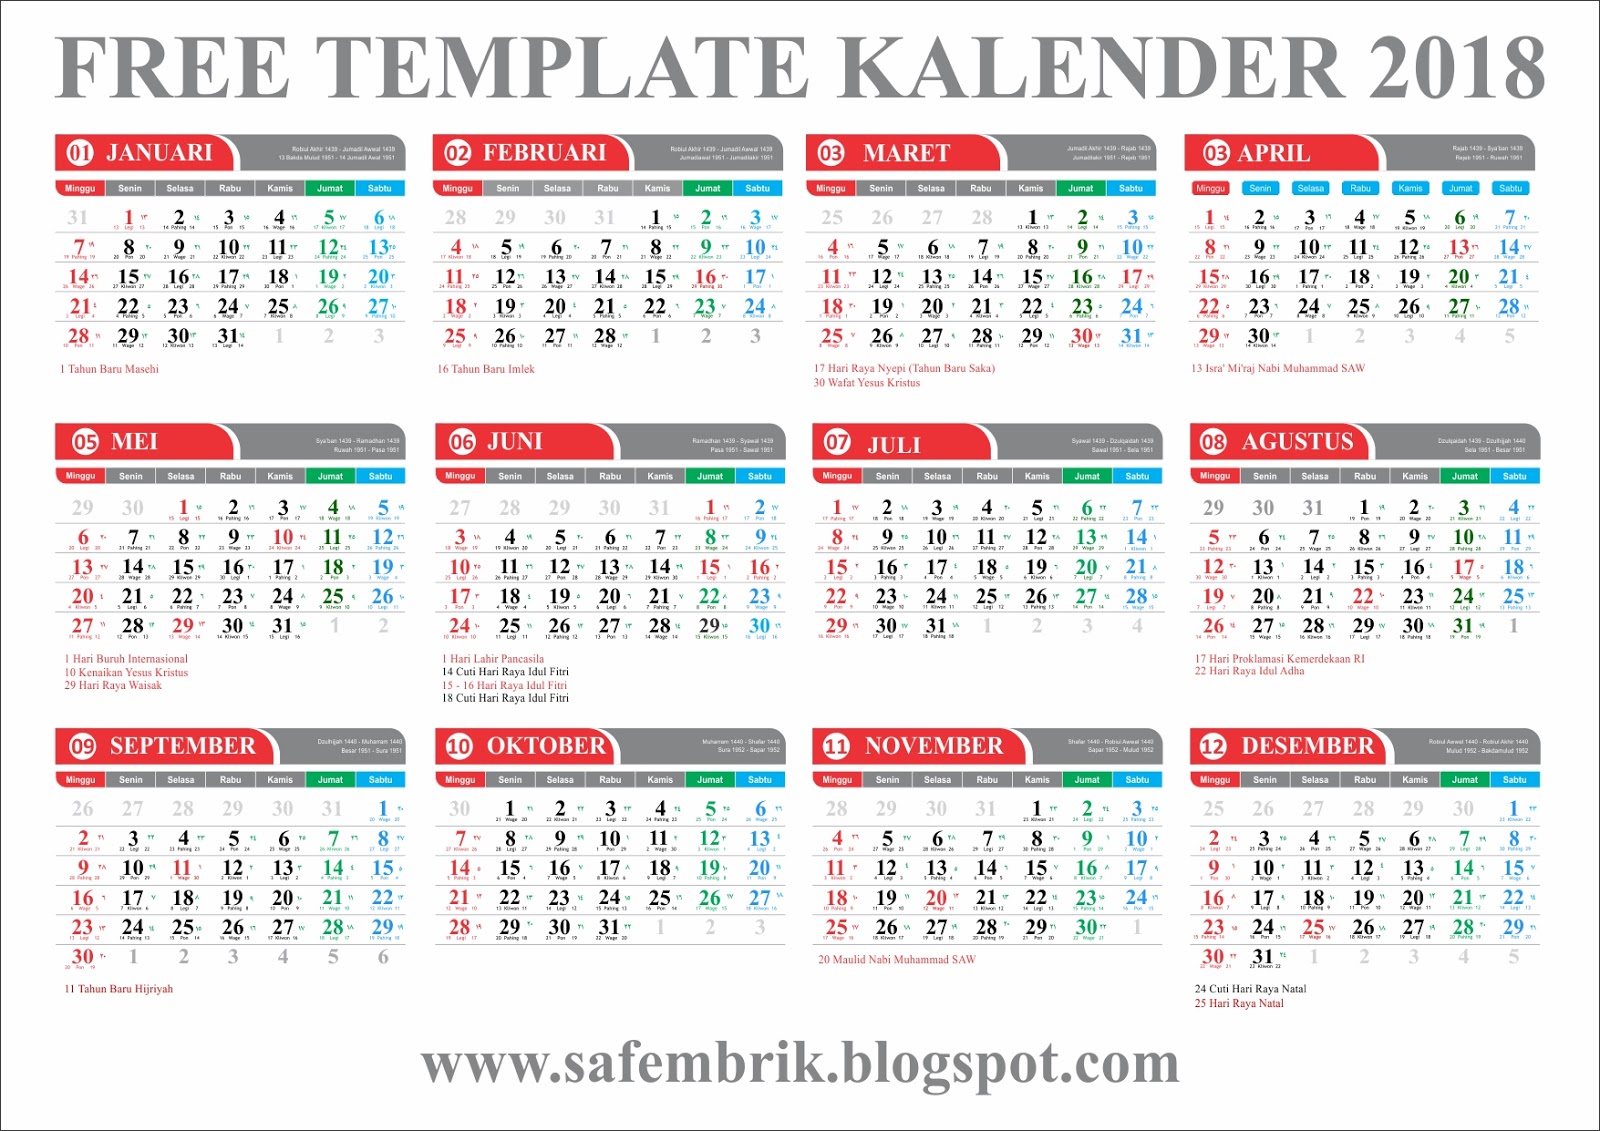 MI HAYATUL ISLAM Download Gratis Free Template Kalender 2018